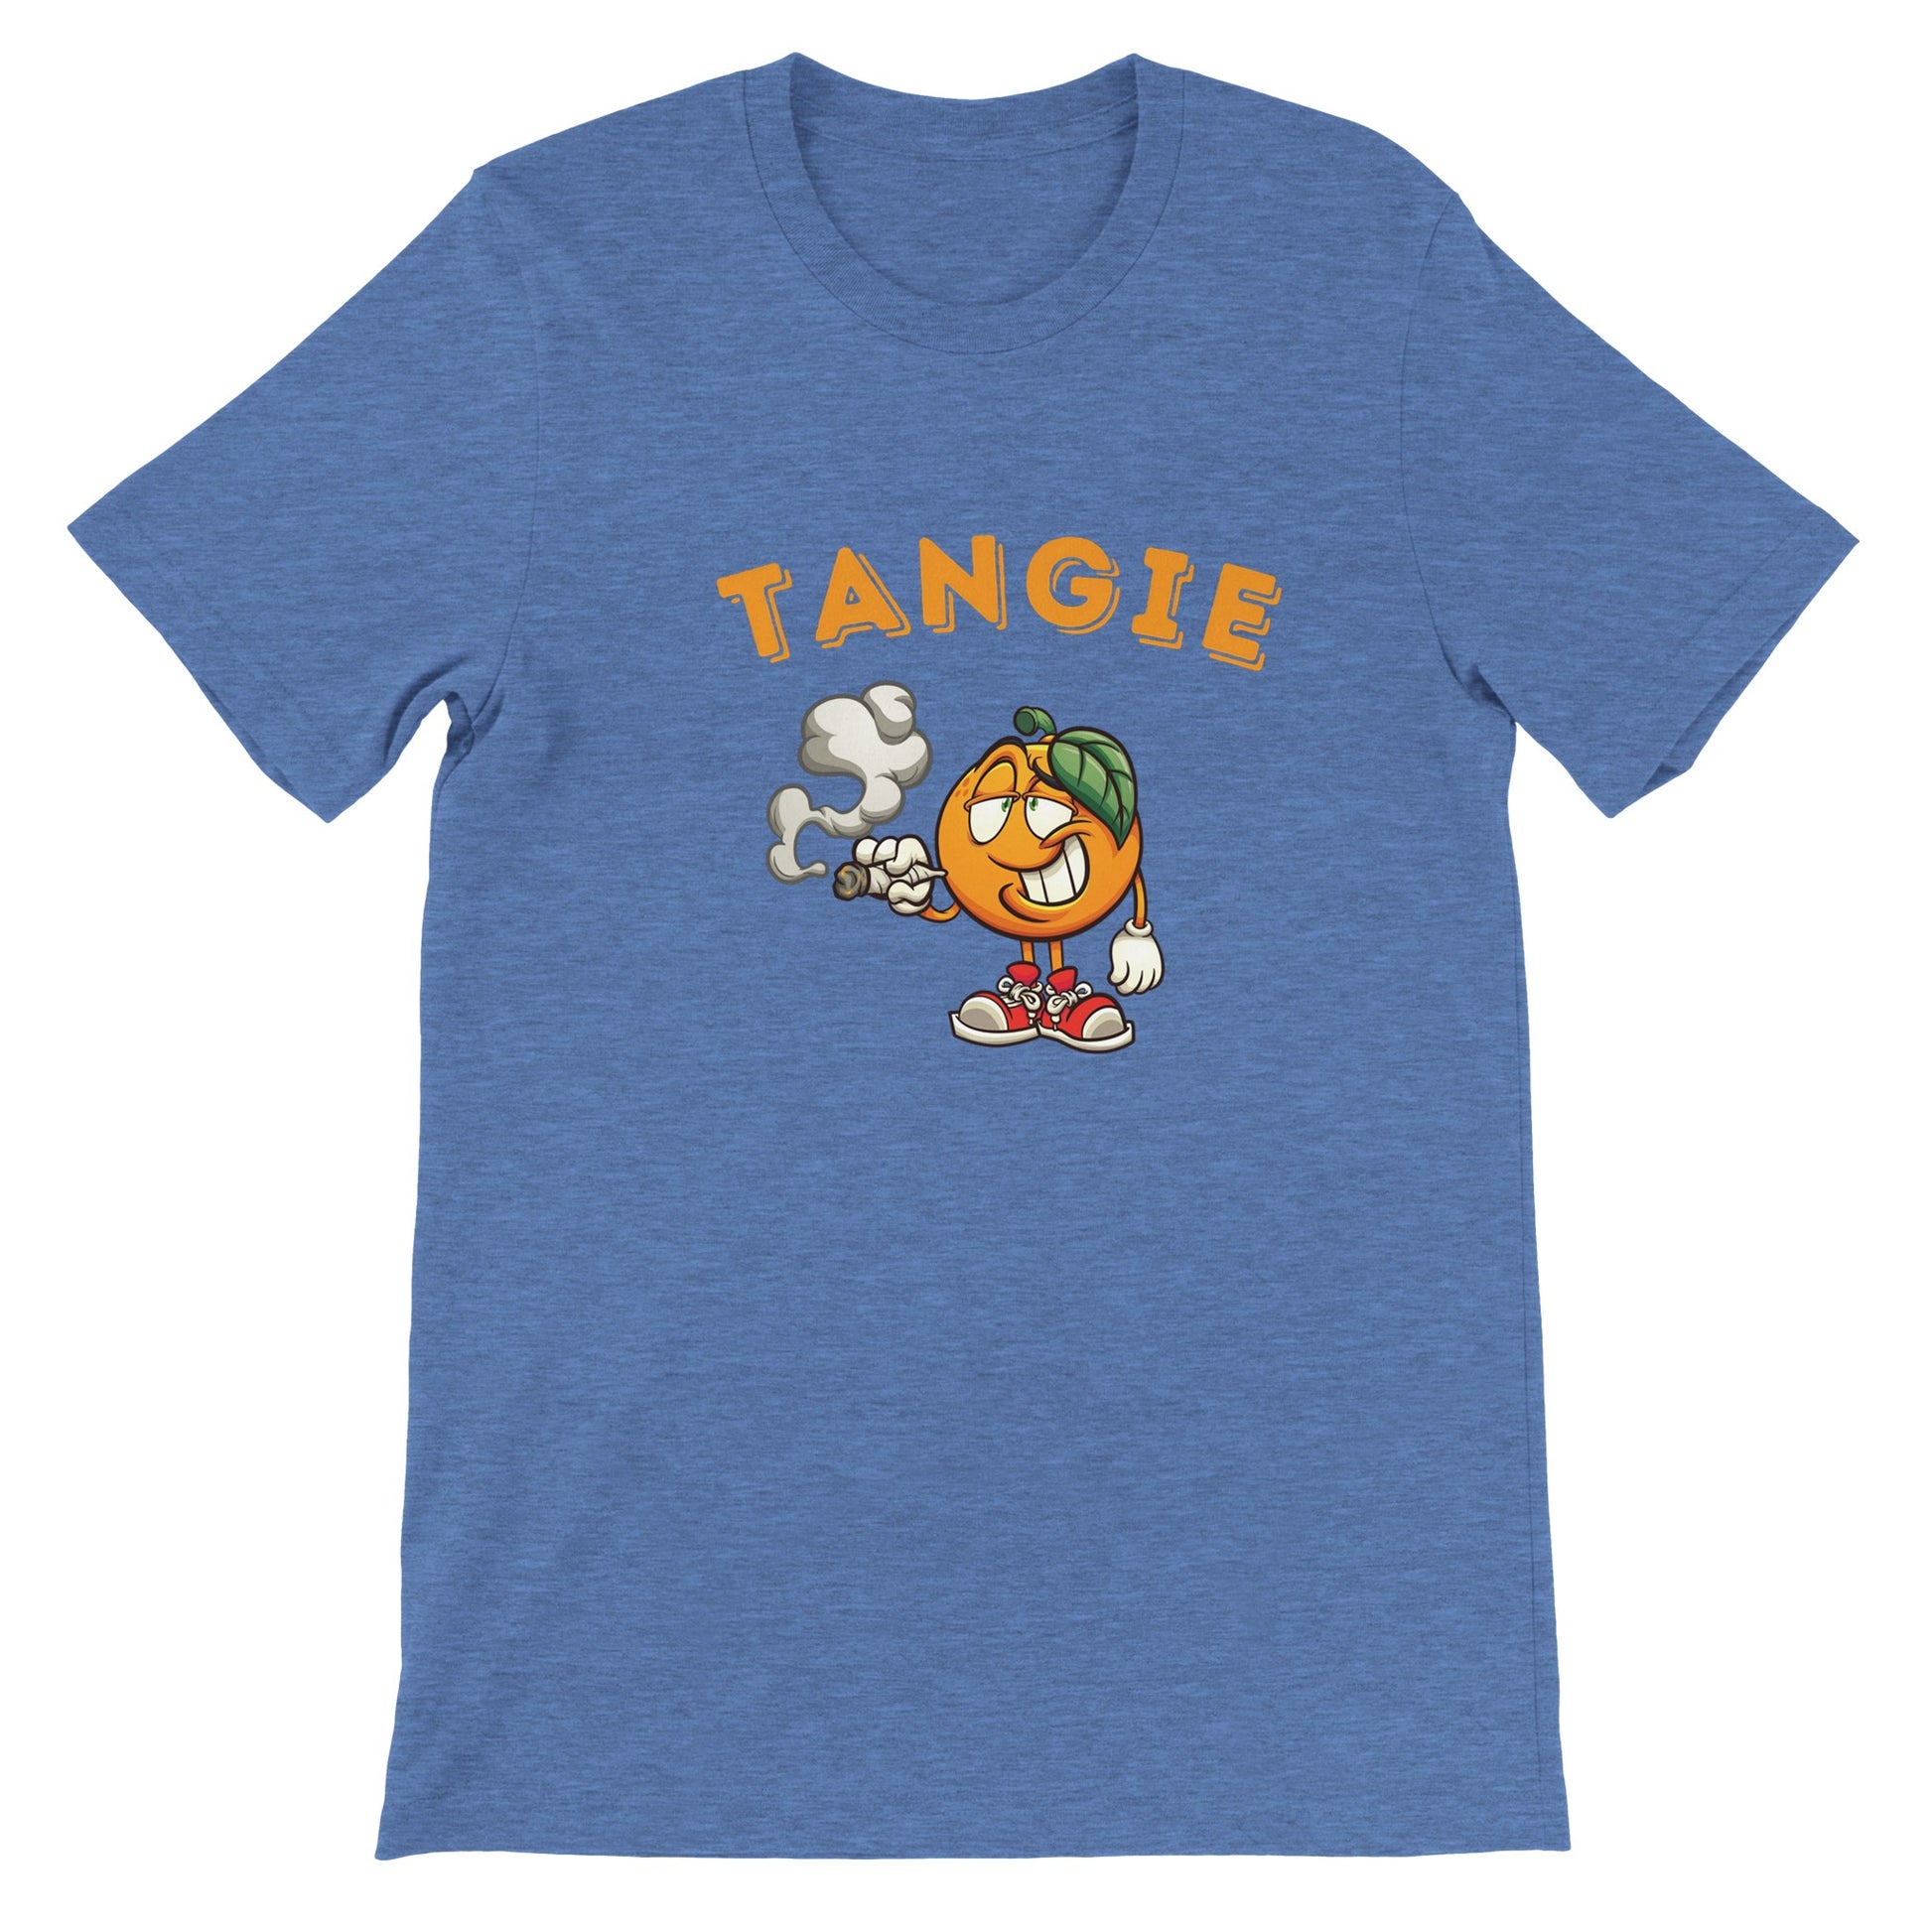 Tangie strain T-shirt dankweedtees